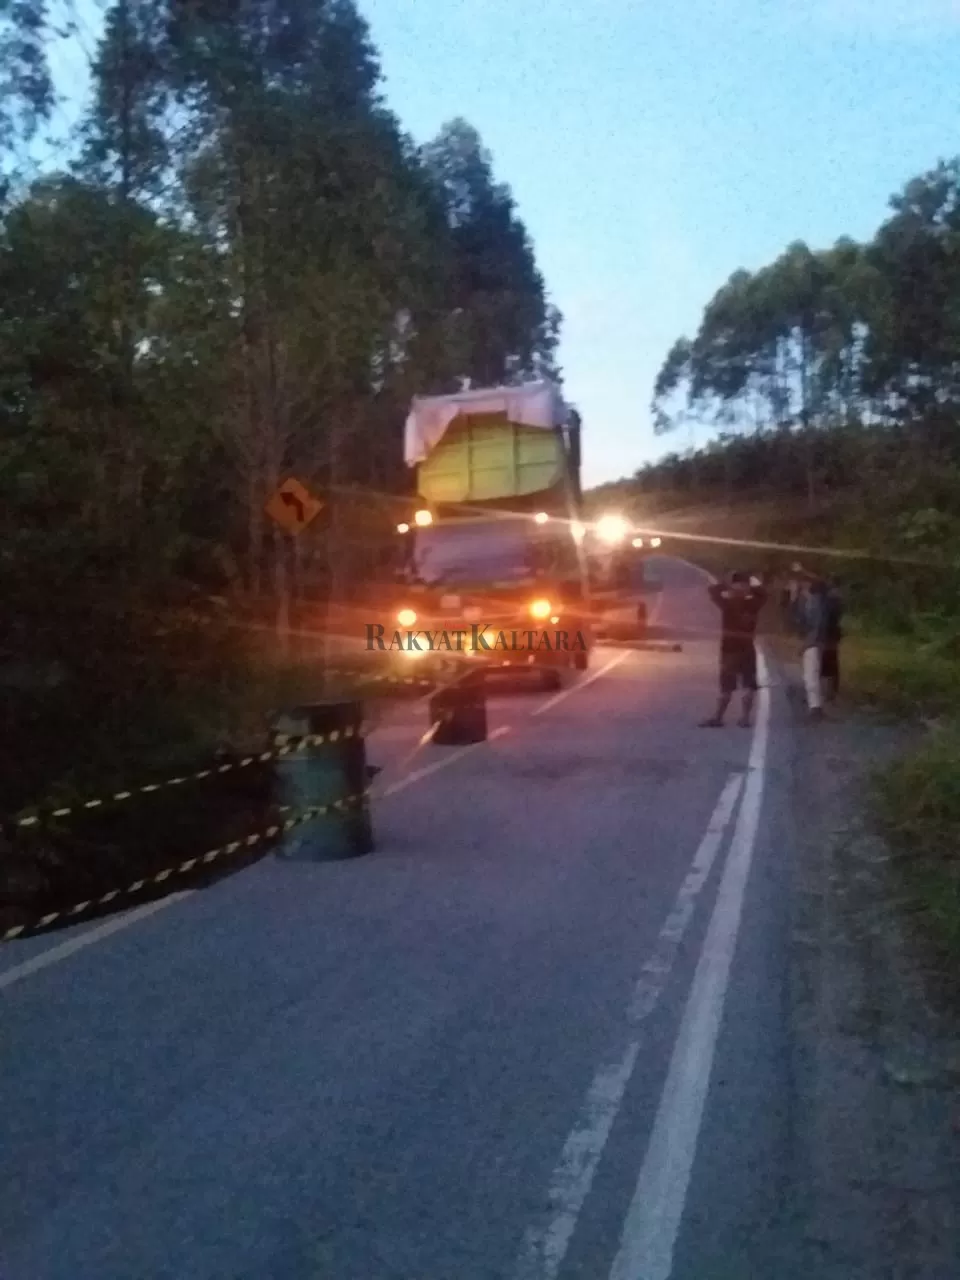 PERBAIKAN: Jalan longsor di jalan poros Trans Kalimantan tidak menghambat lalu lintas kendaraan, Rabu (30/3).